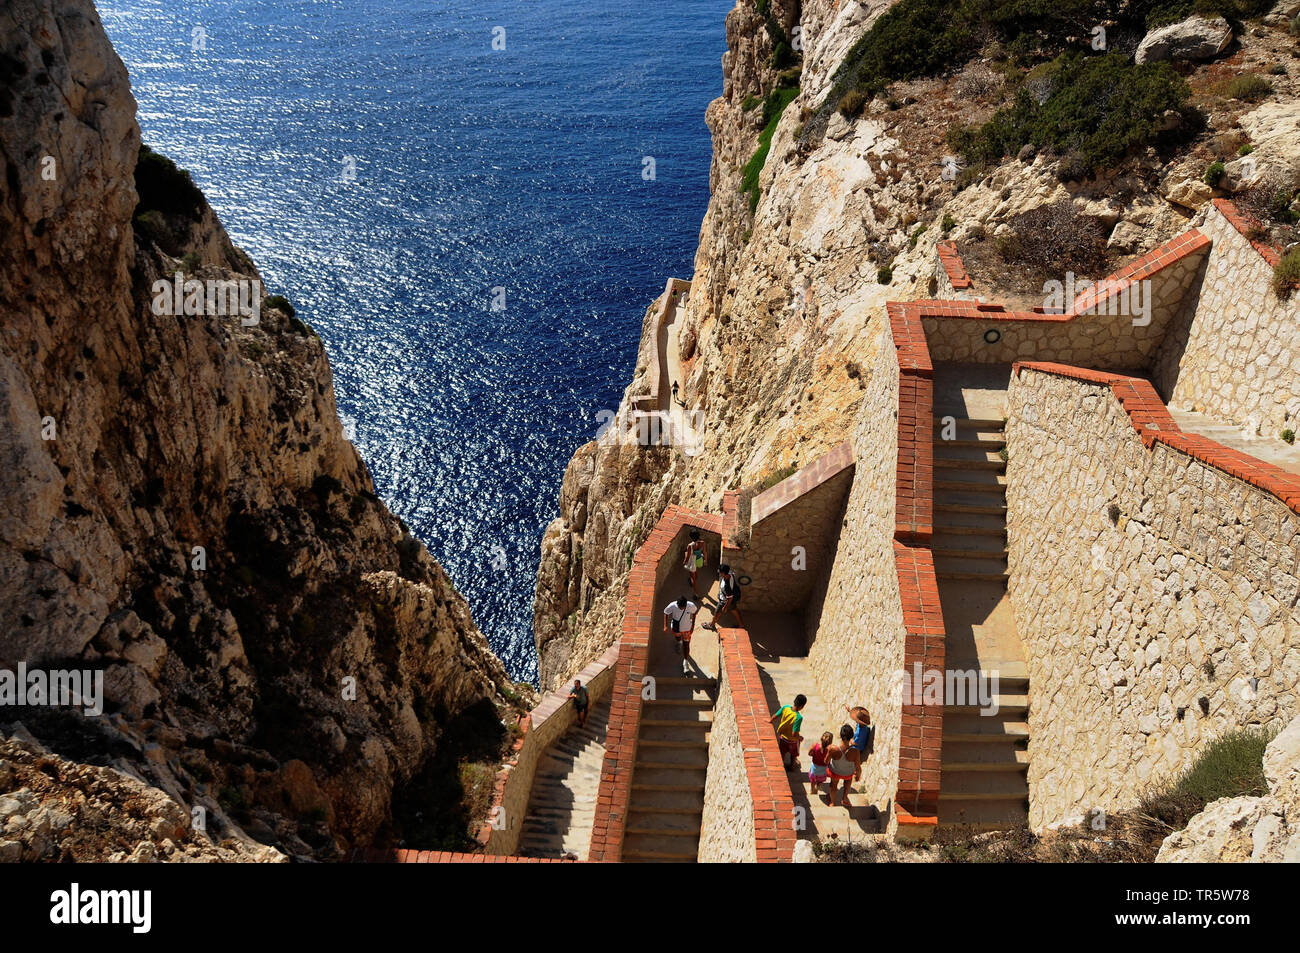 stairway to Neptune's Grotto at the steep coast, Italy, Sardegna Stock Photo